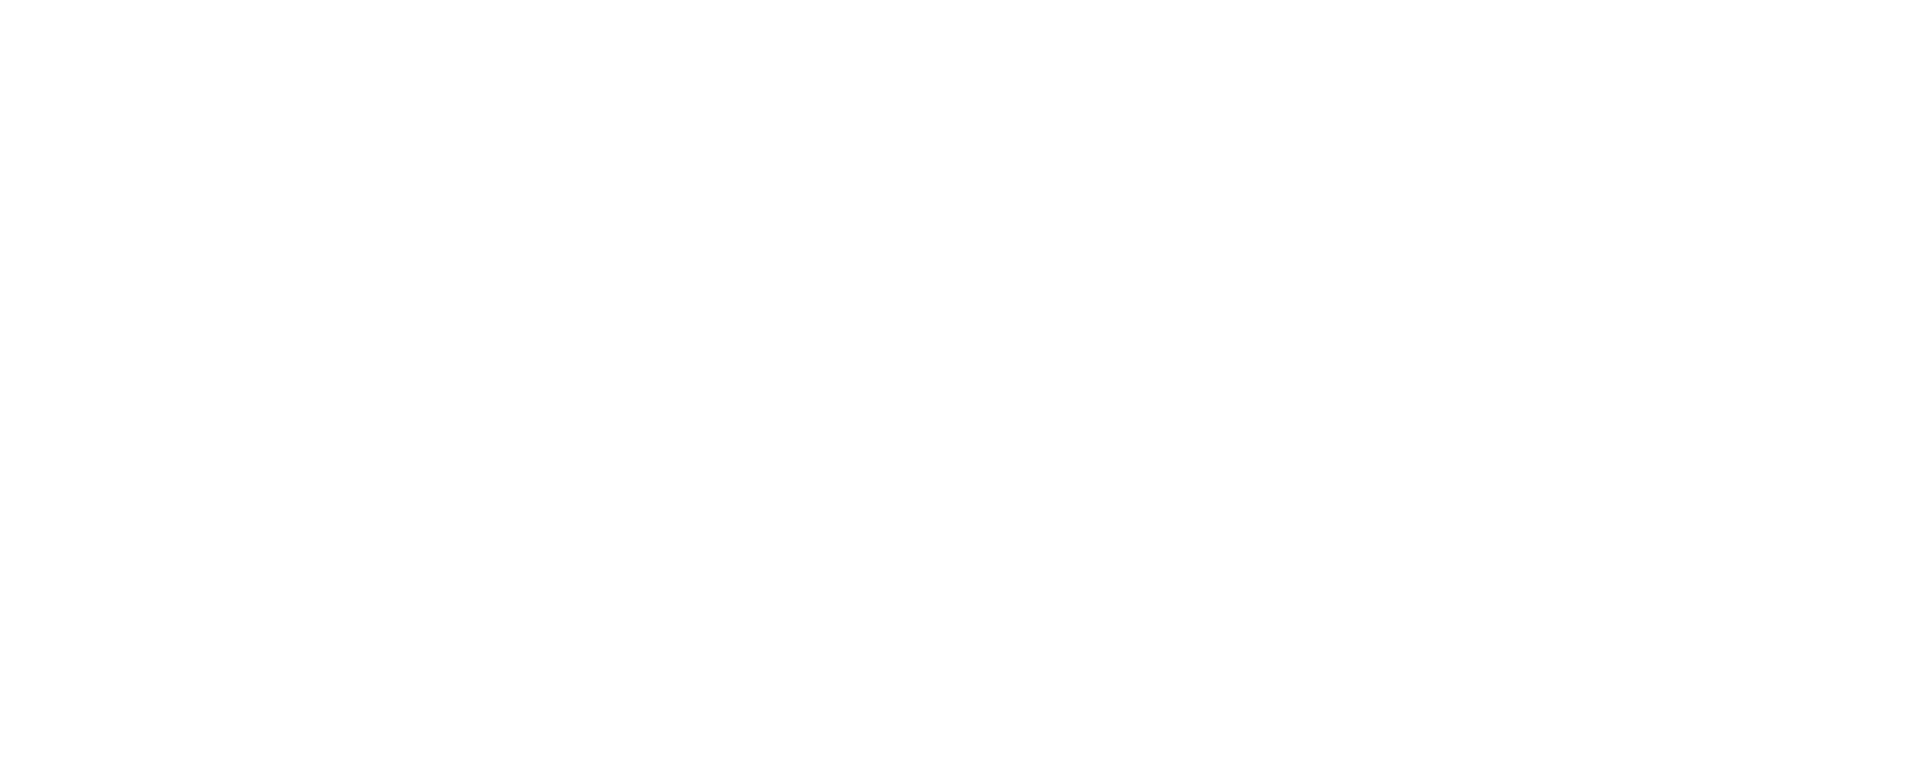 Solar Power Africa logo